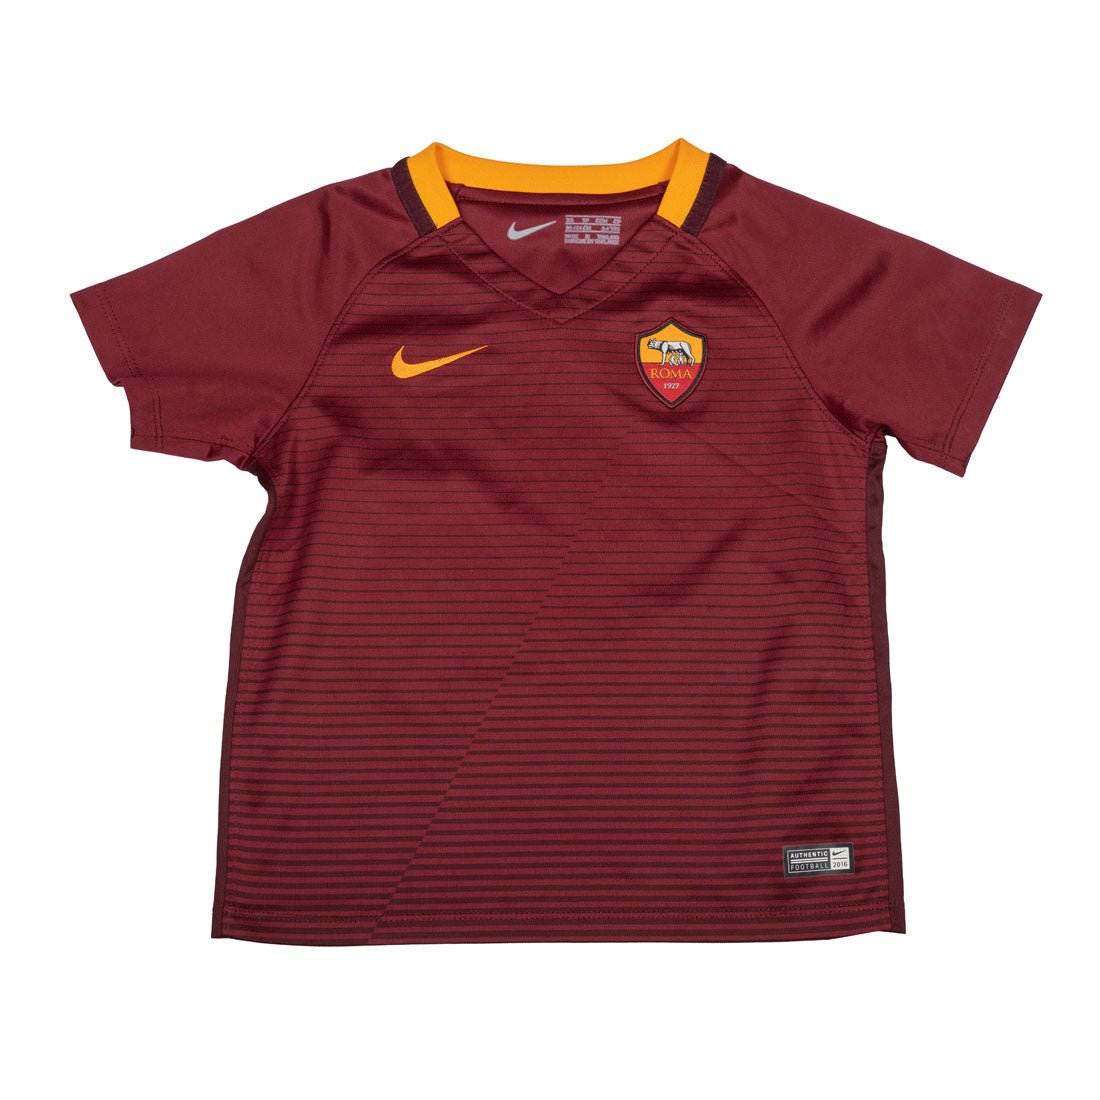 Nike Roma Sports Shirt for Boys - mymadstore.com